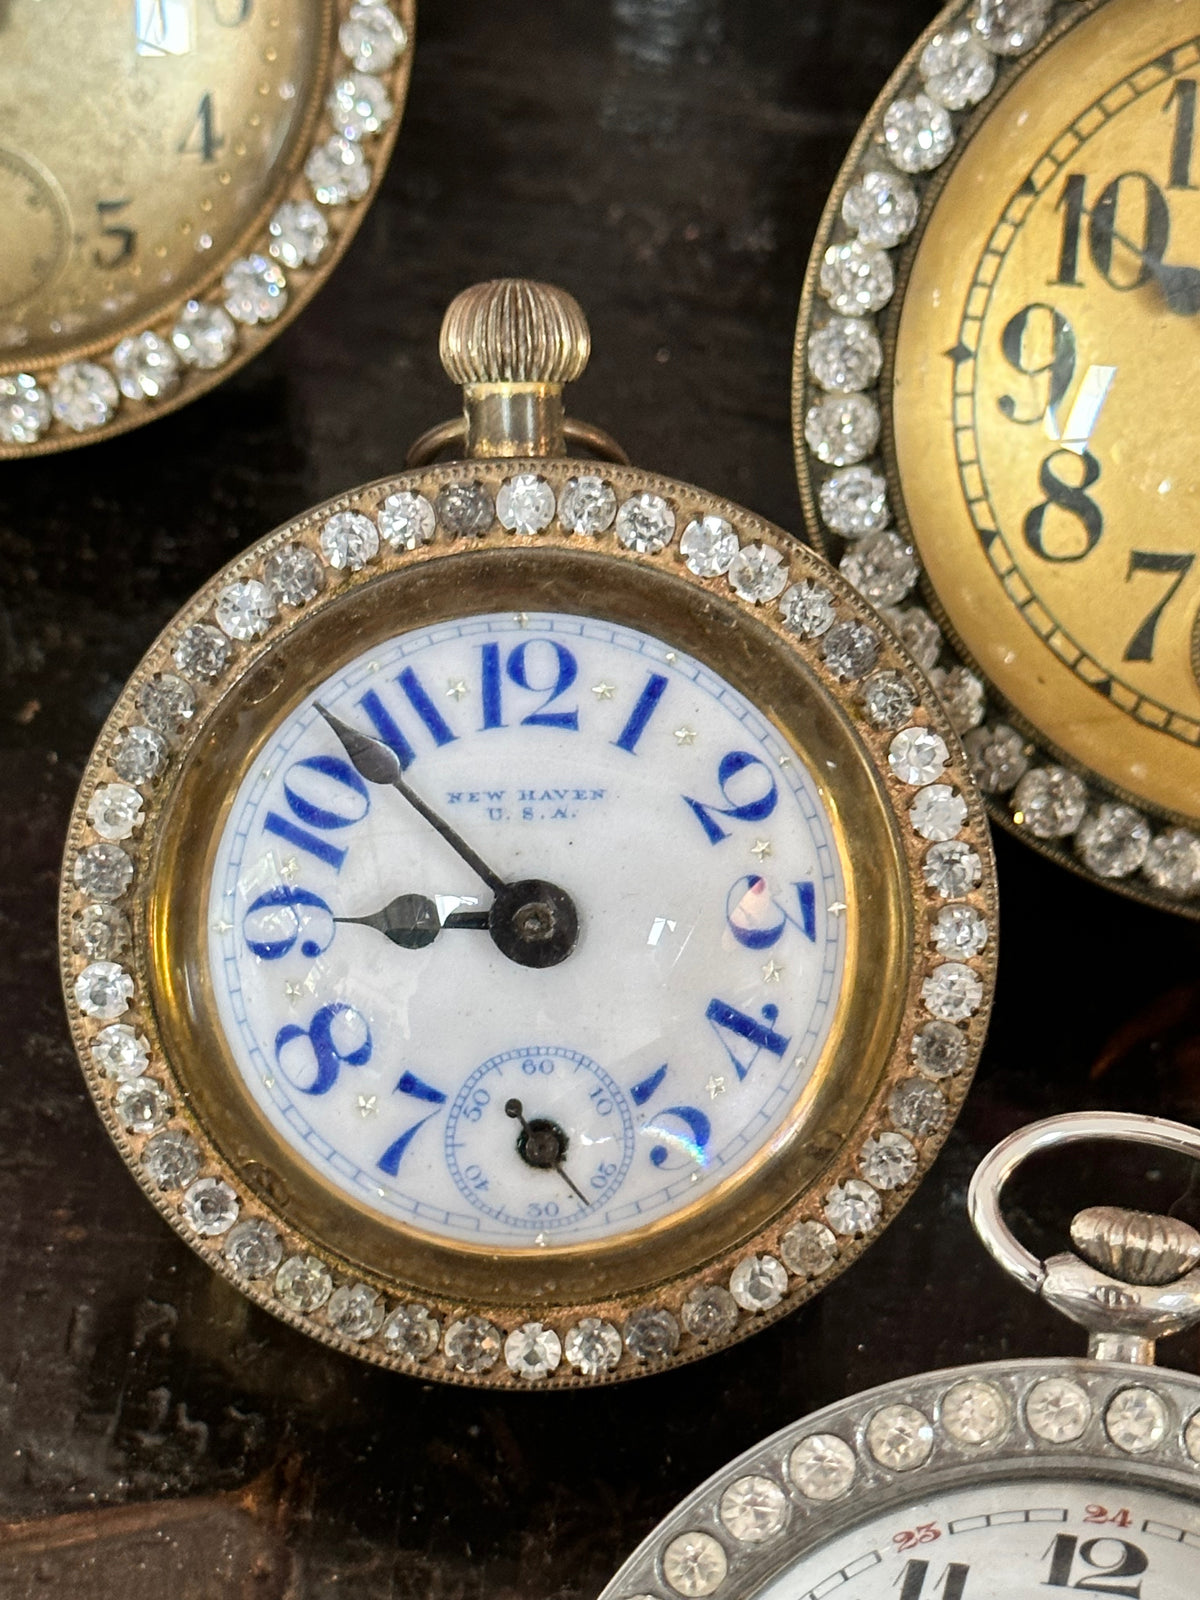 Sixteen Jeweled Ball Clocks